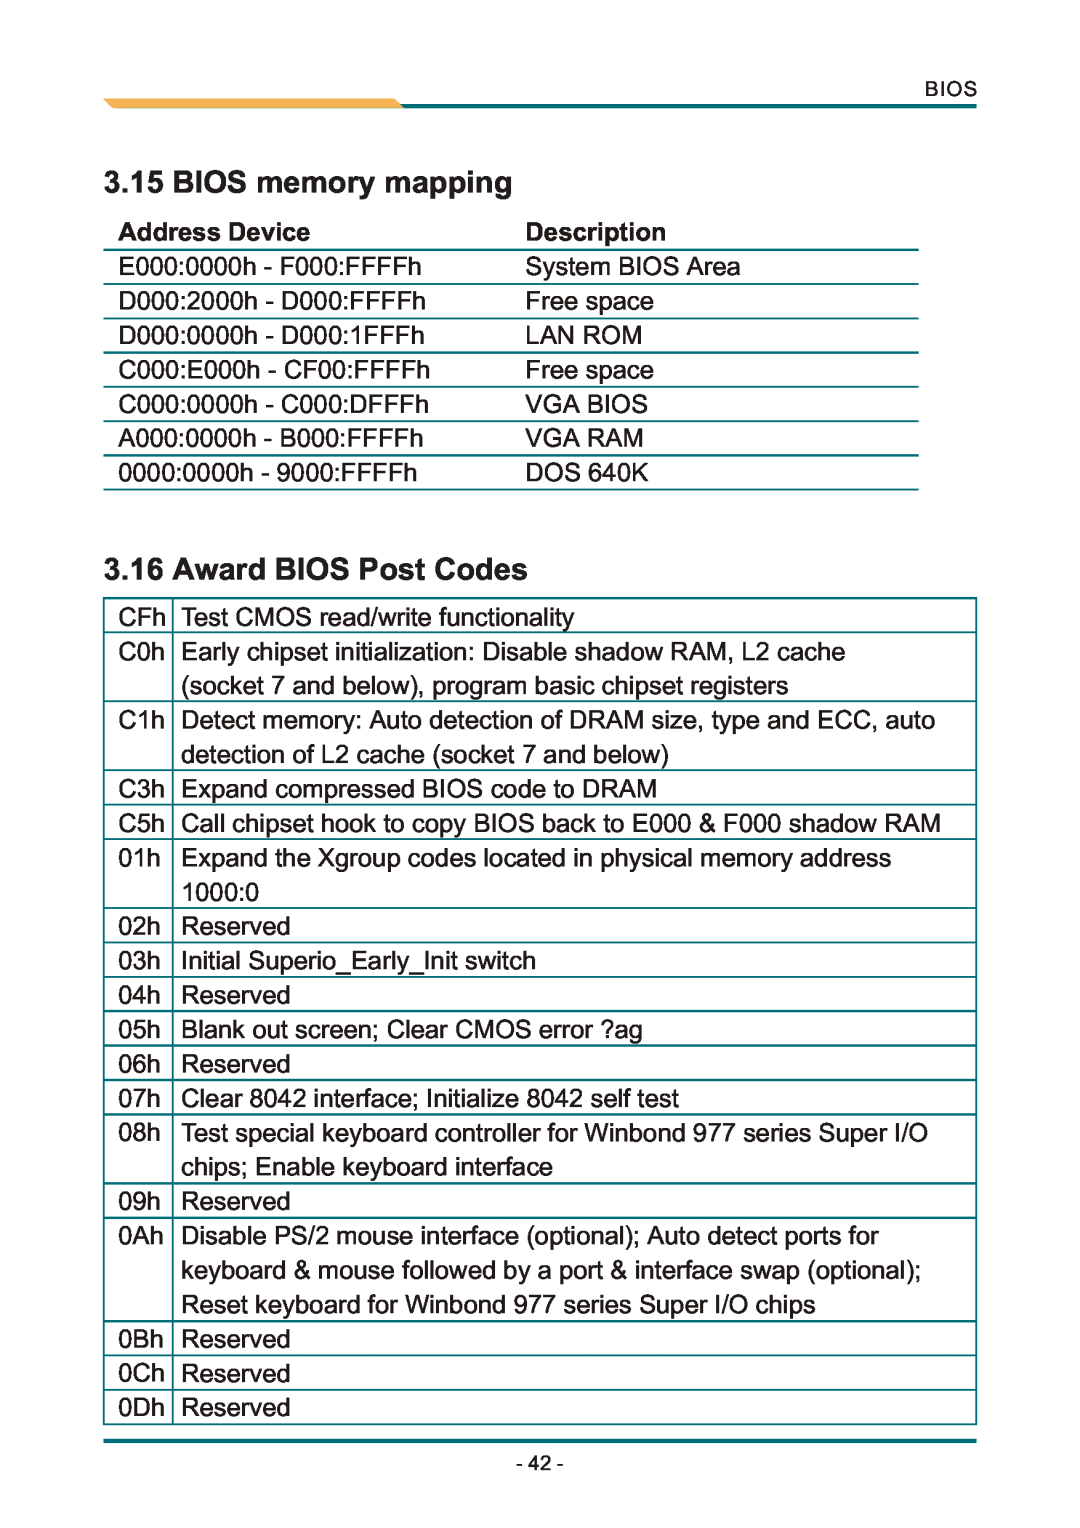 AMD SBX-5363 manual BIOS memory mapping, Award BIOS Post Codes, Address Device, Description 